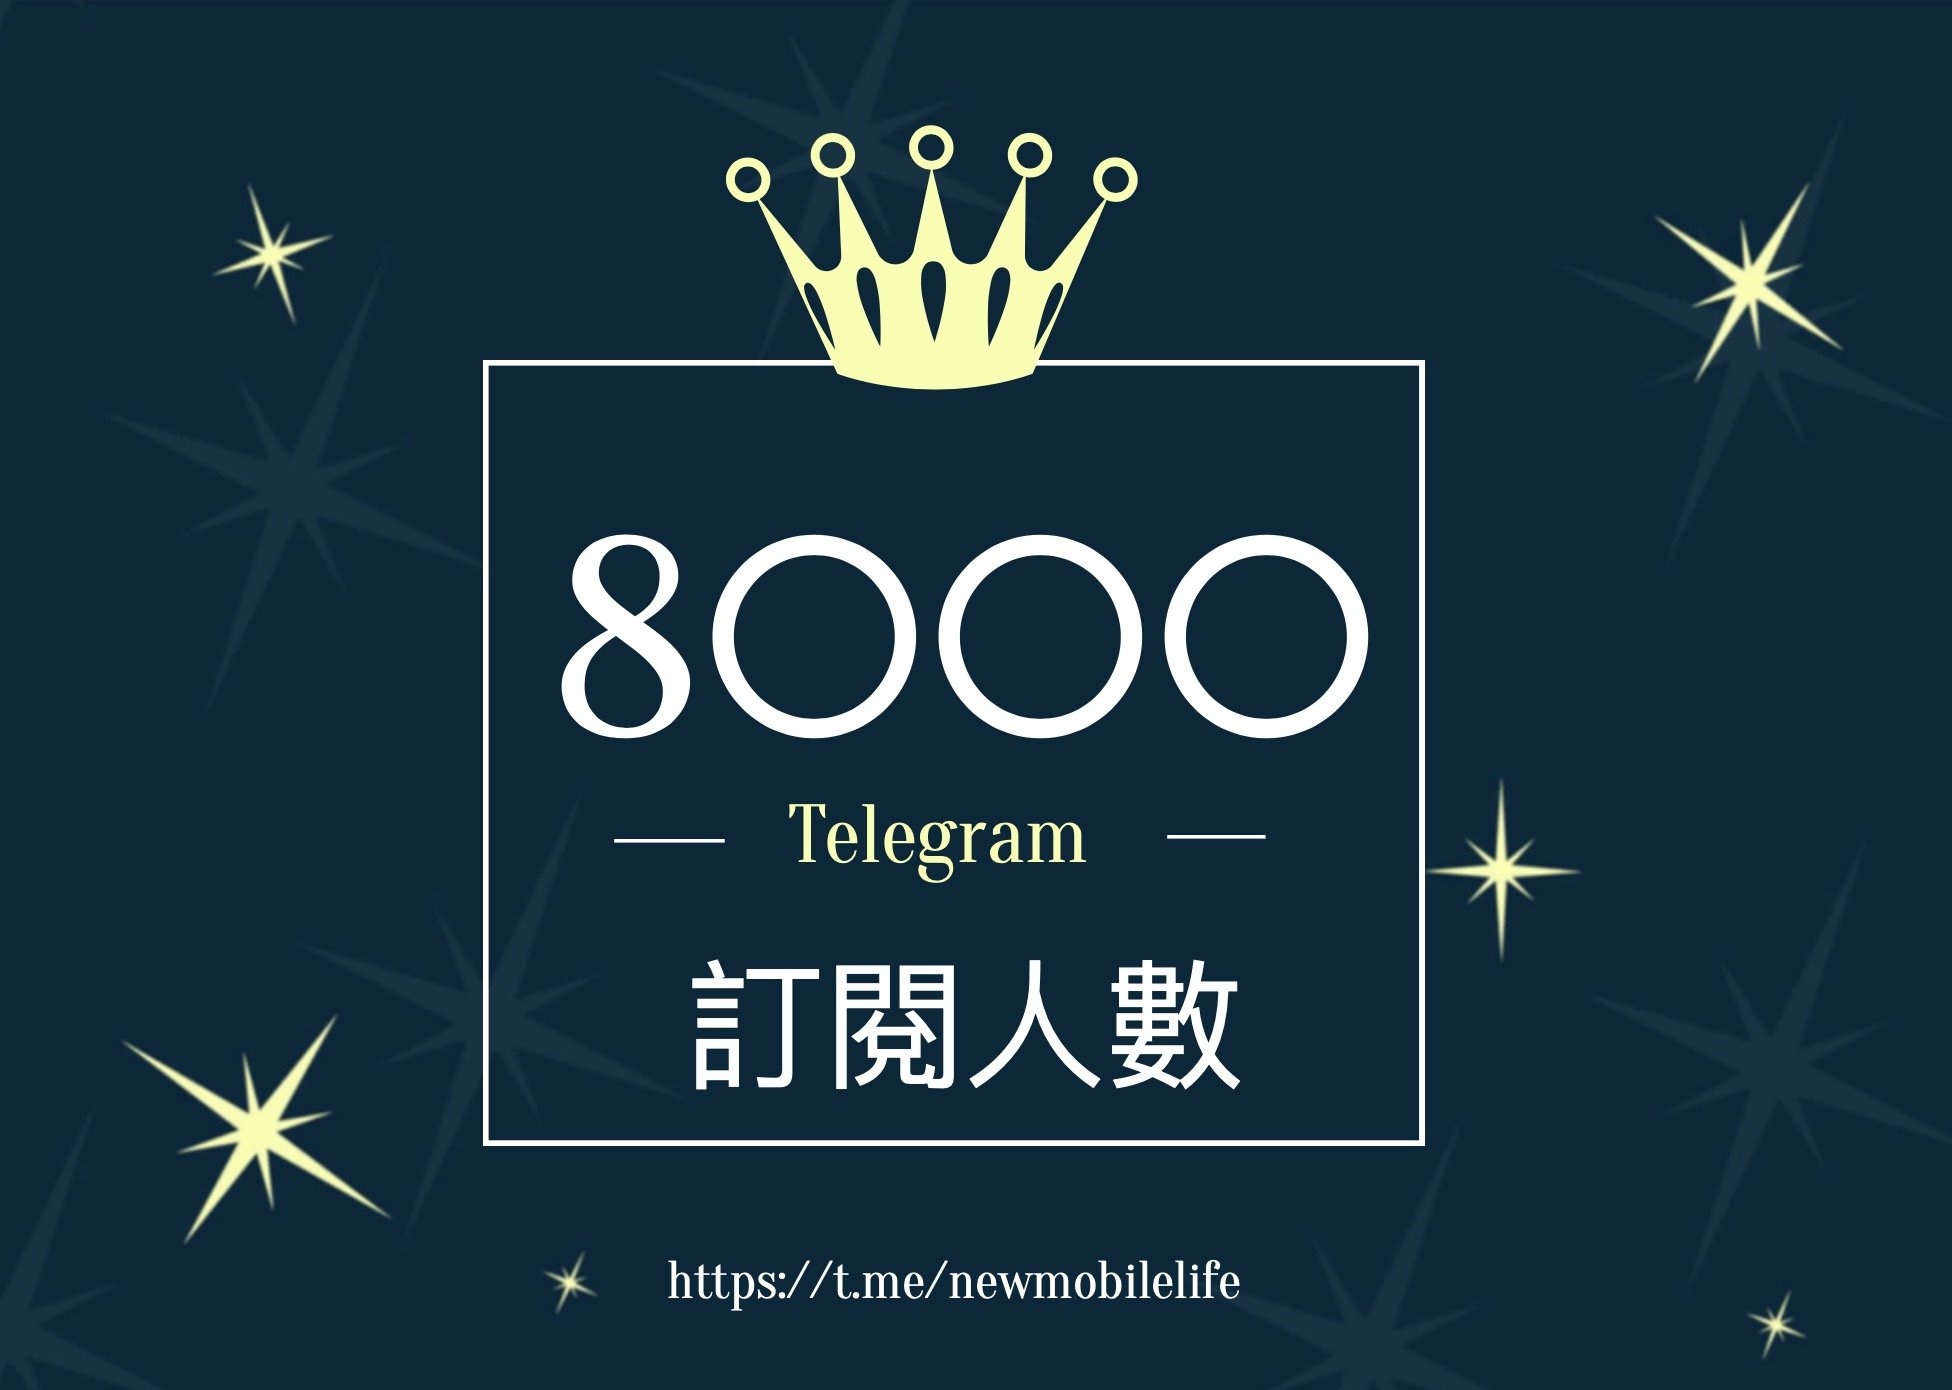 telegram 8000